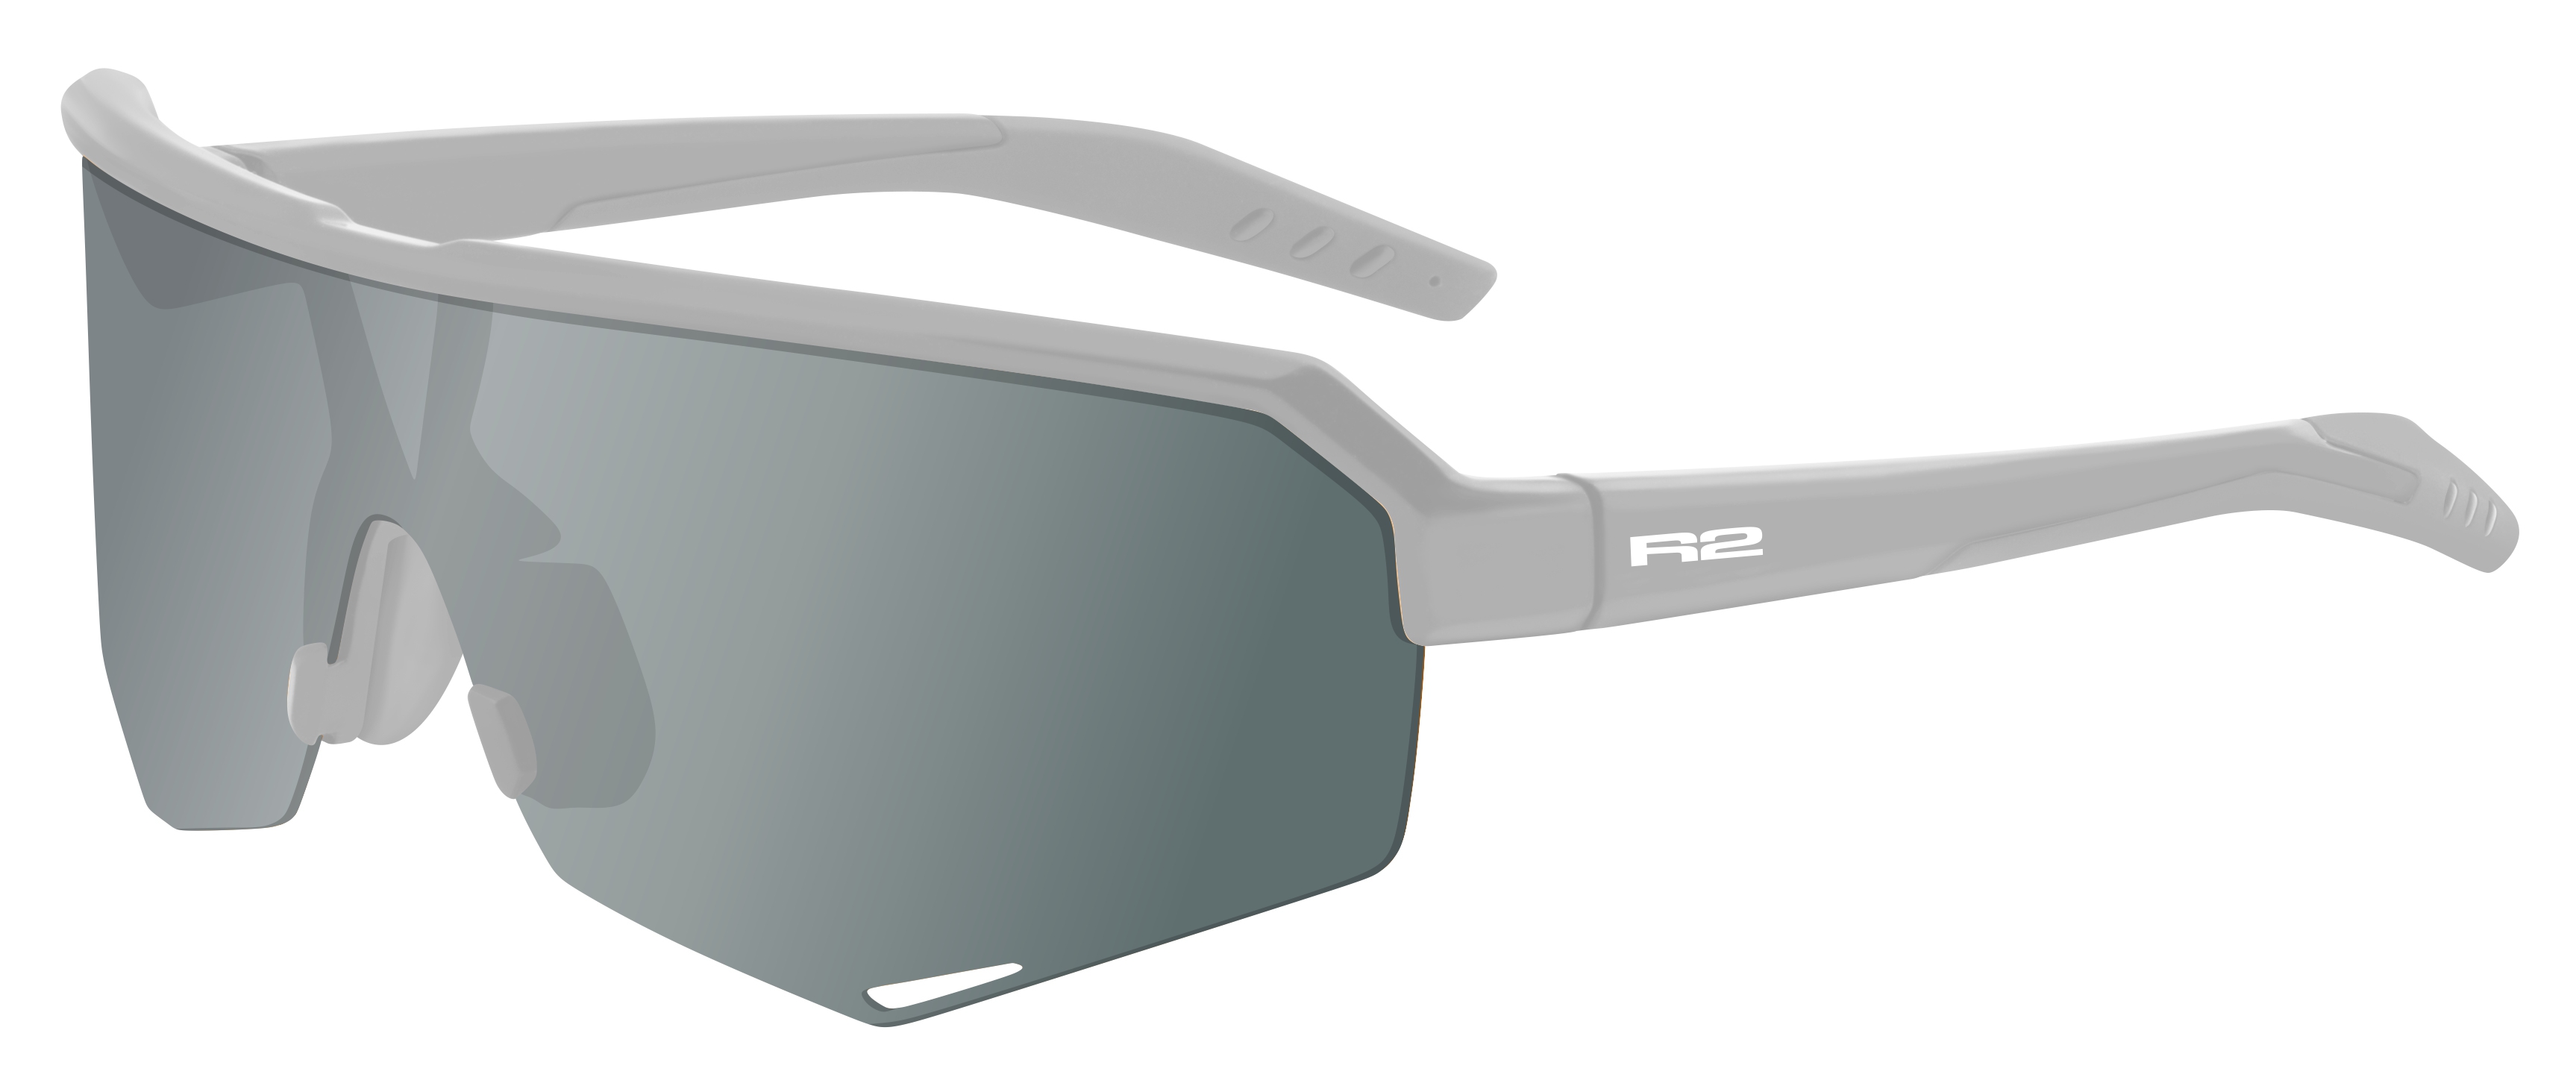 Brýle R2 Fluke AT100H šedé/šedé mirror